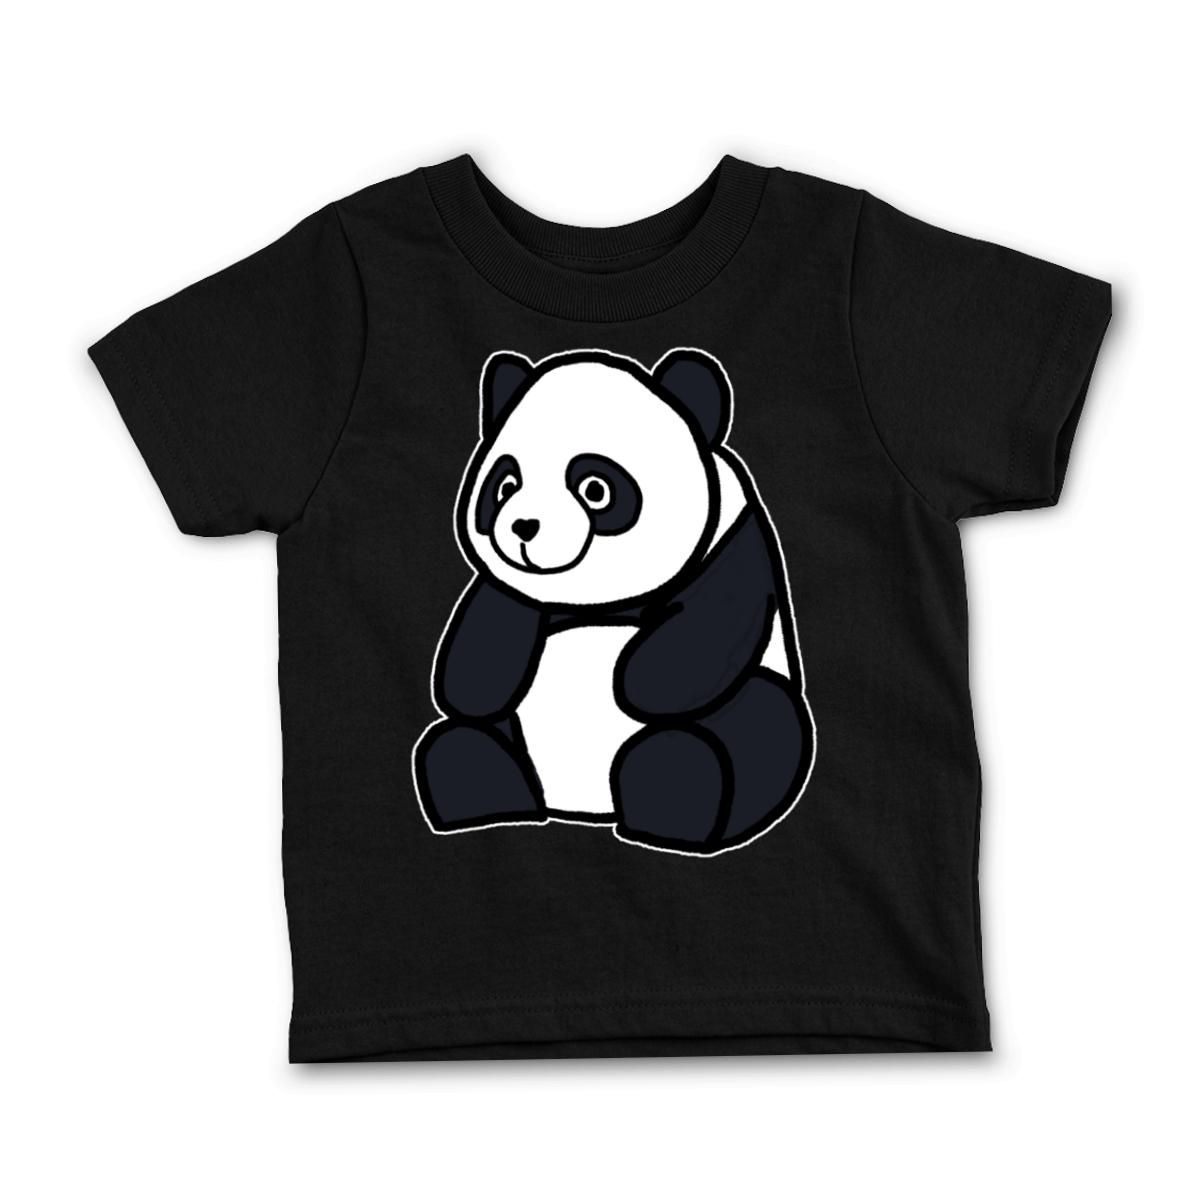 Panda Infant Tee 18M black